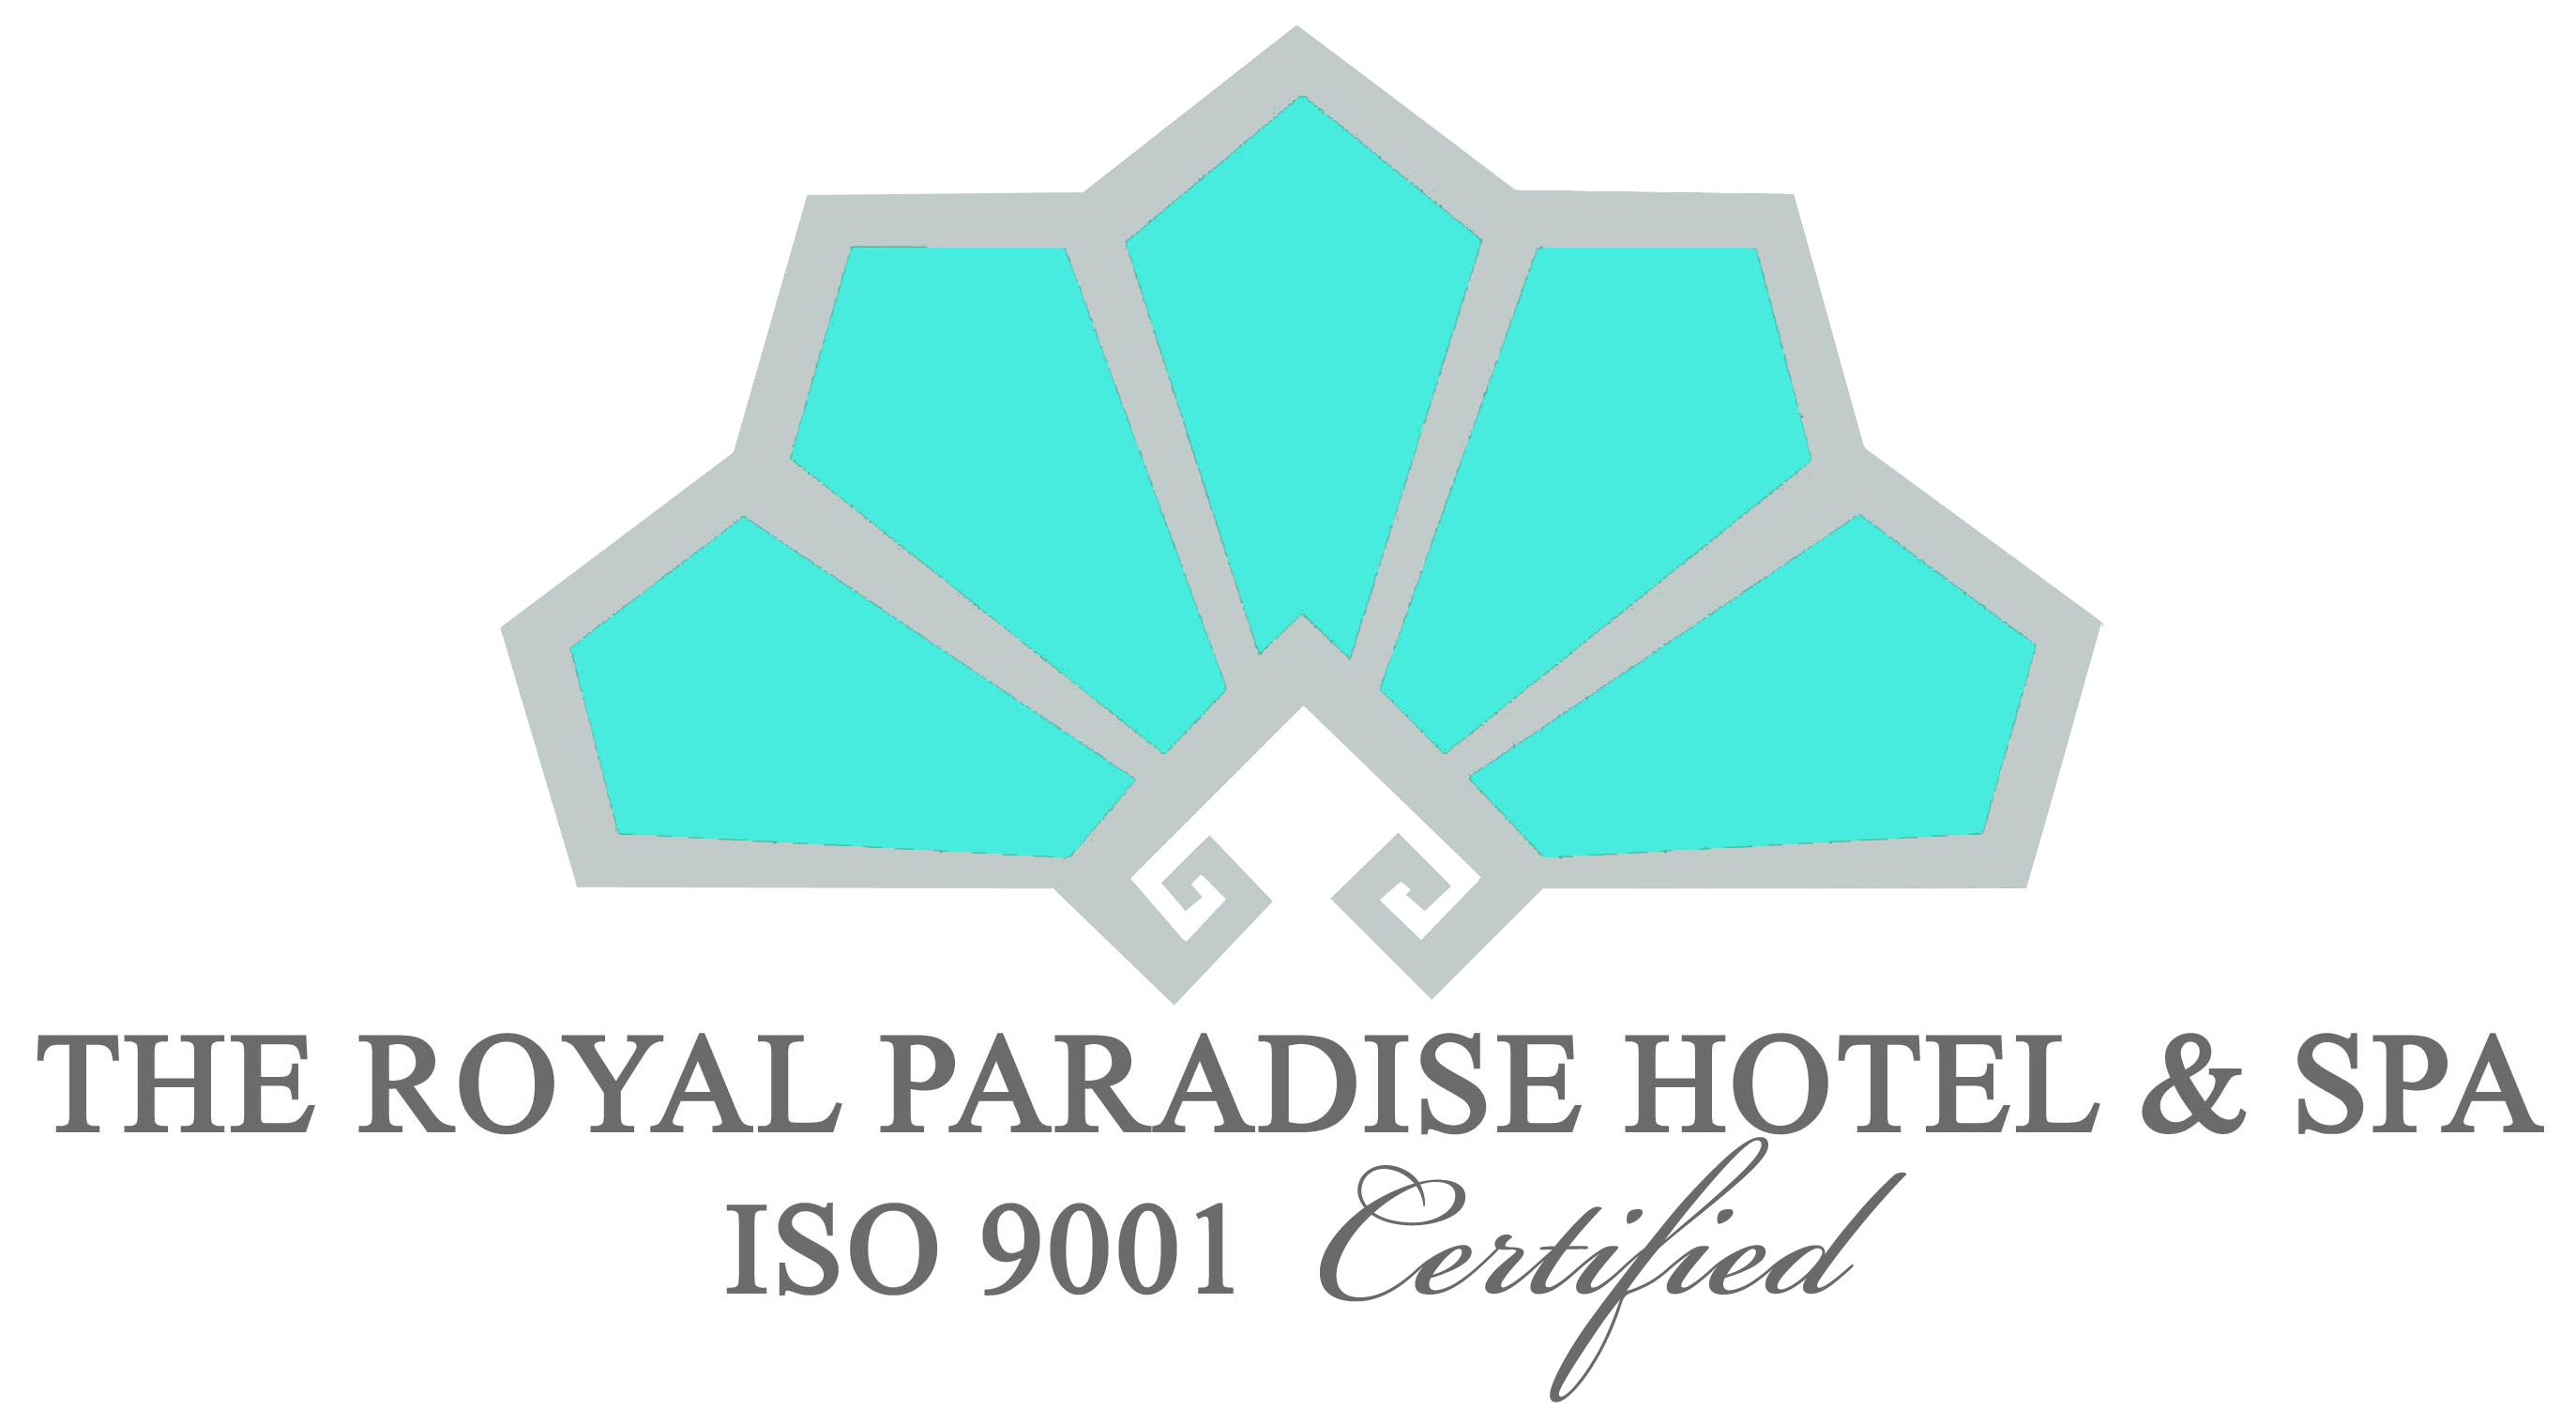 THE ROYAL PARADISE HOTEL & SPA